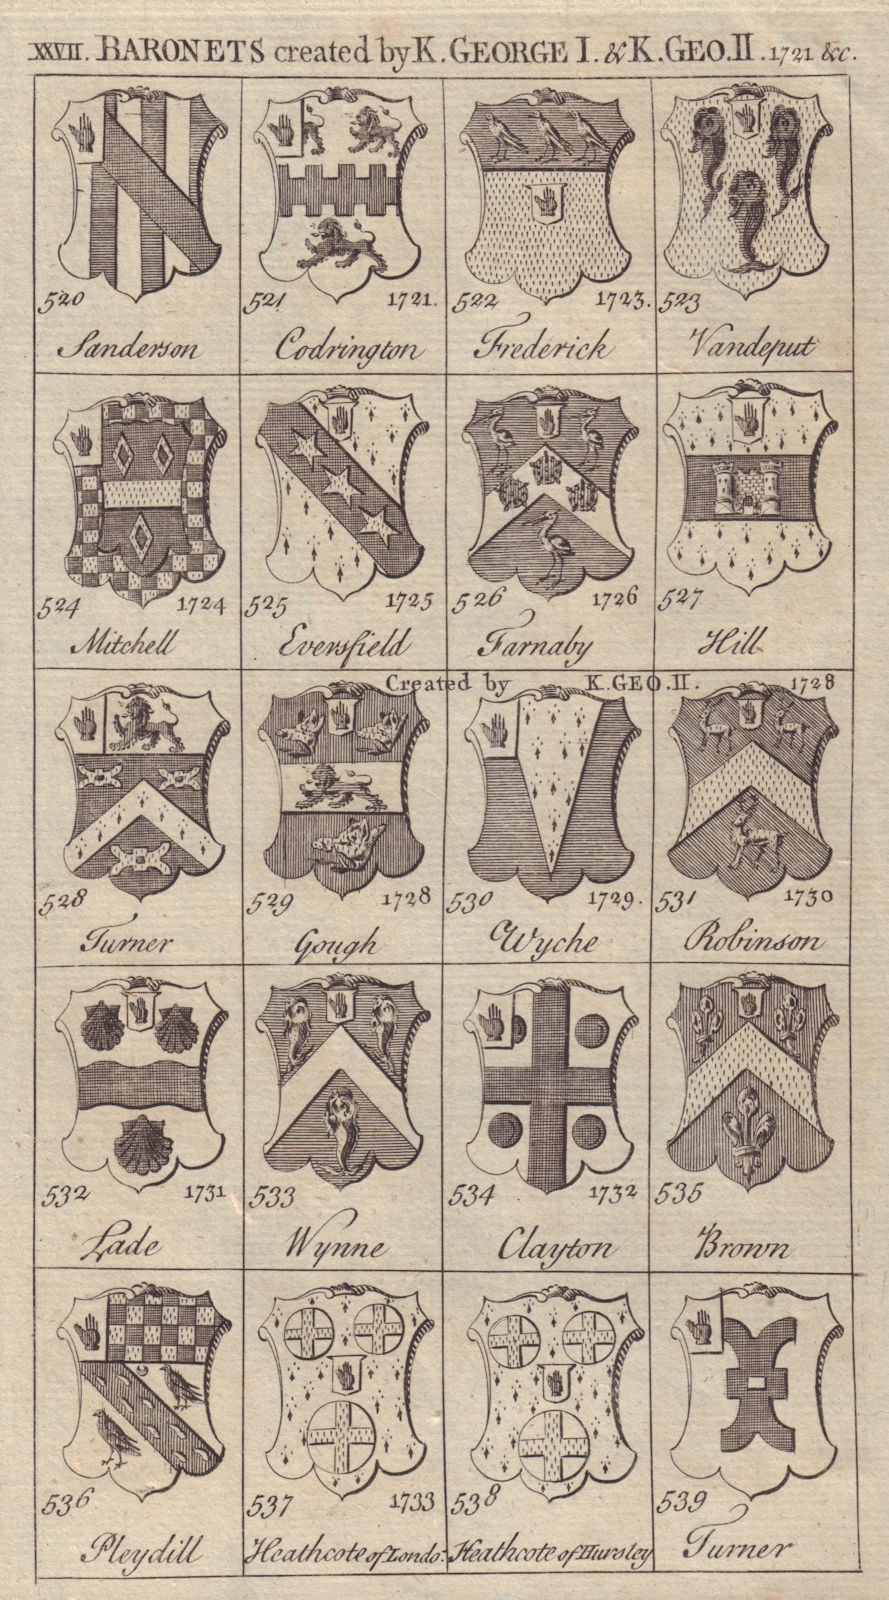 Associate Product George I/II Baronets 1721 Mitchell Farnaby Turner Gough Wyche Lade Wynne… 1753